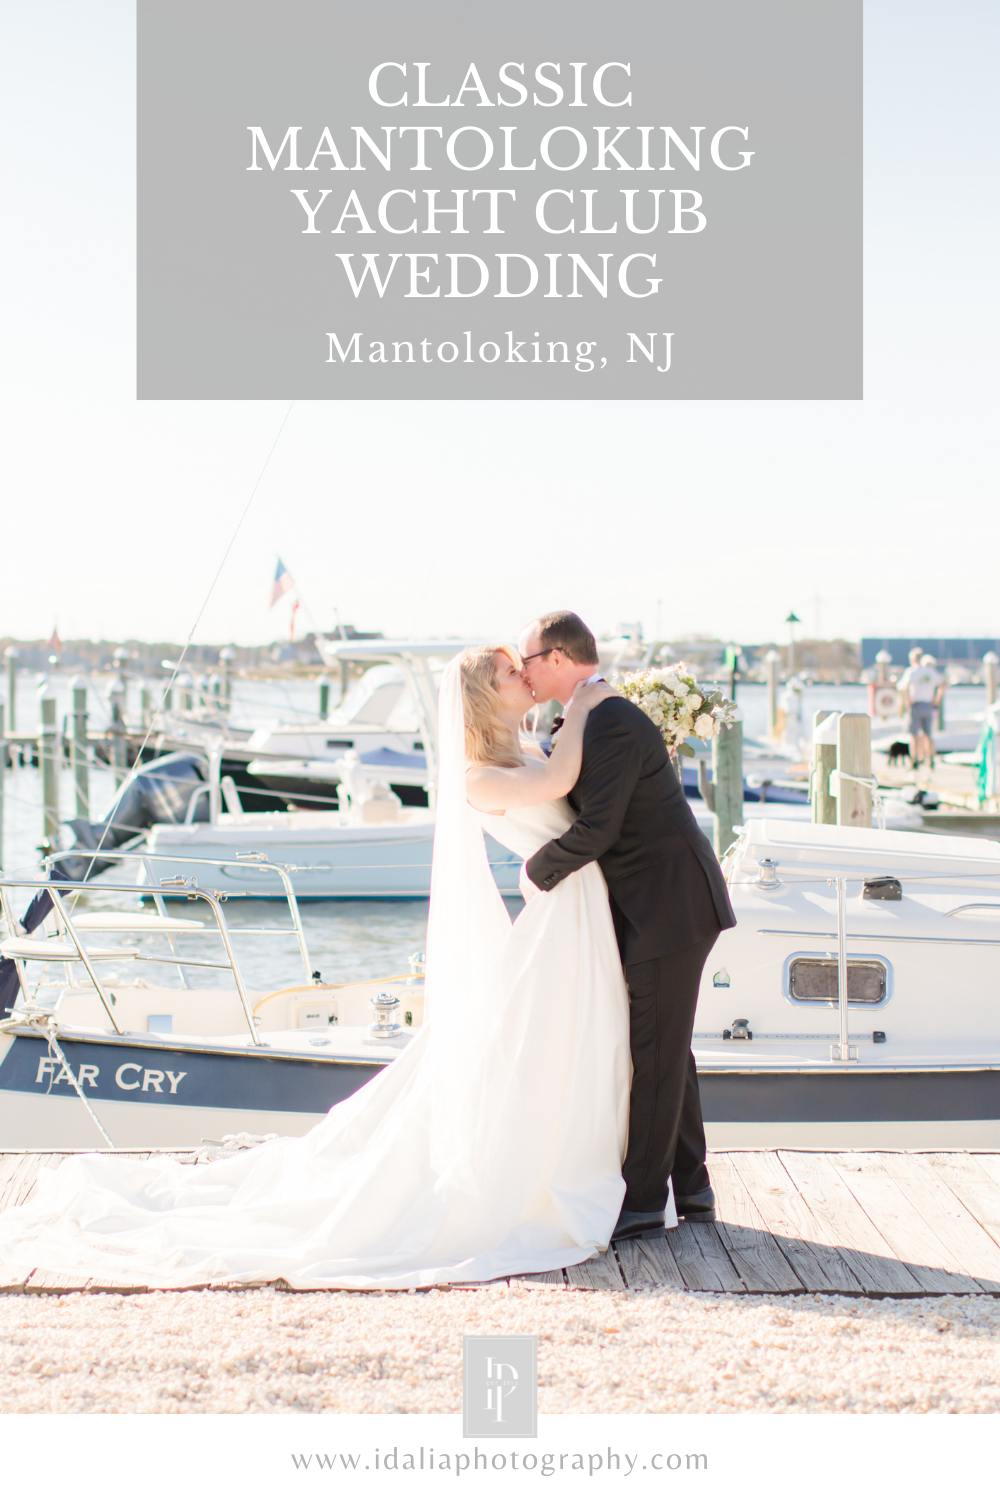 Mantoloking Yacht Club Wedding Photos